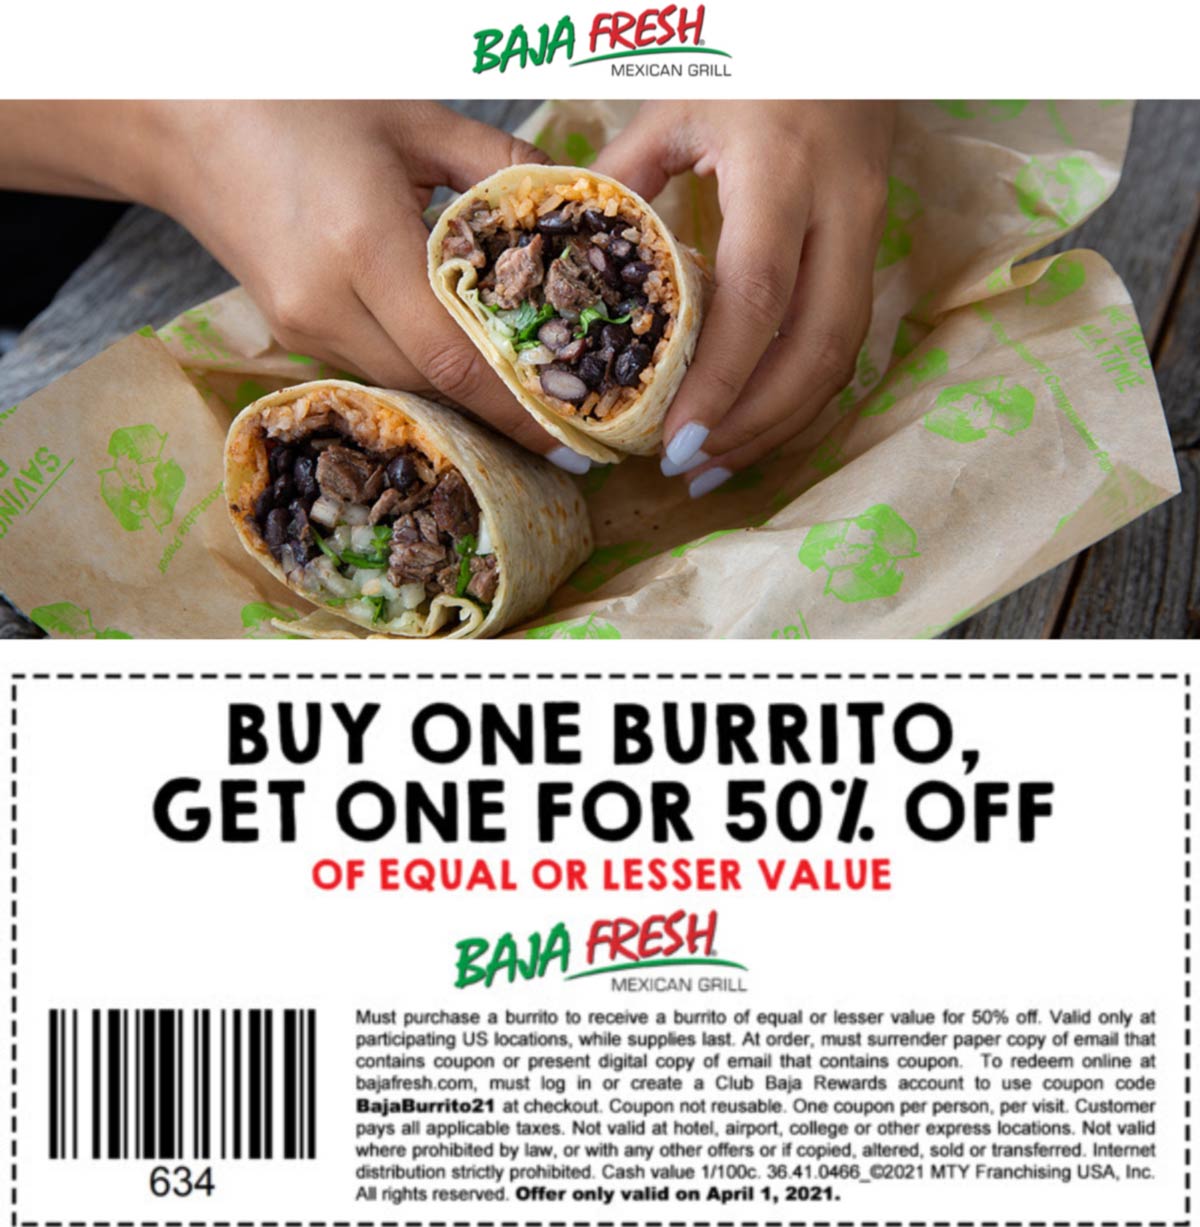 Baja Fresh restaurants Coupon  Second burrito 50% off today at Baja Fresh restaurants #bajafresh 